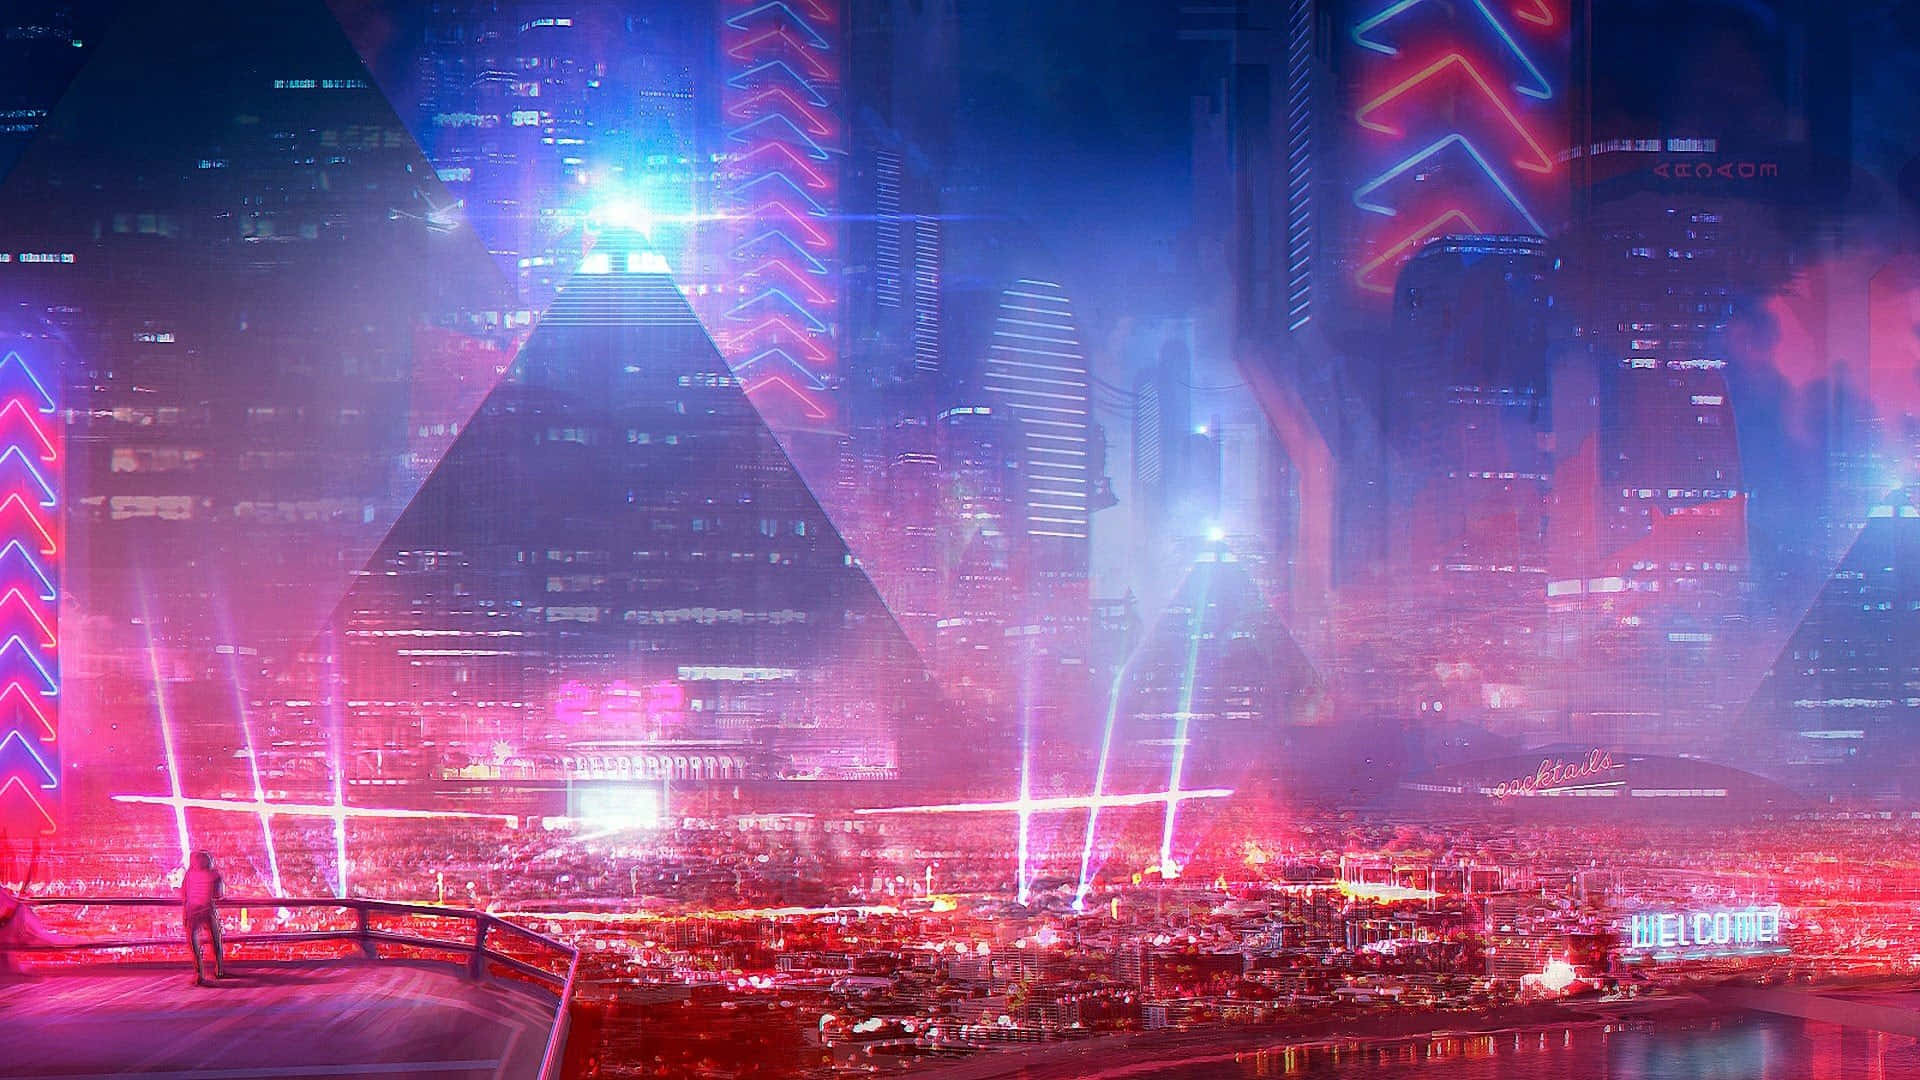 Explore the Cyberpunk City and its neon-lit futuristic skyline